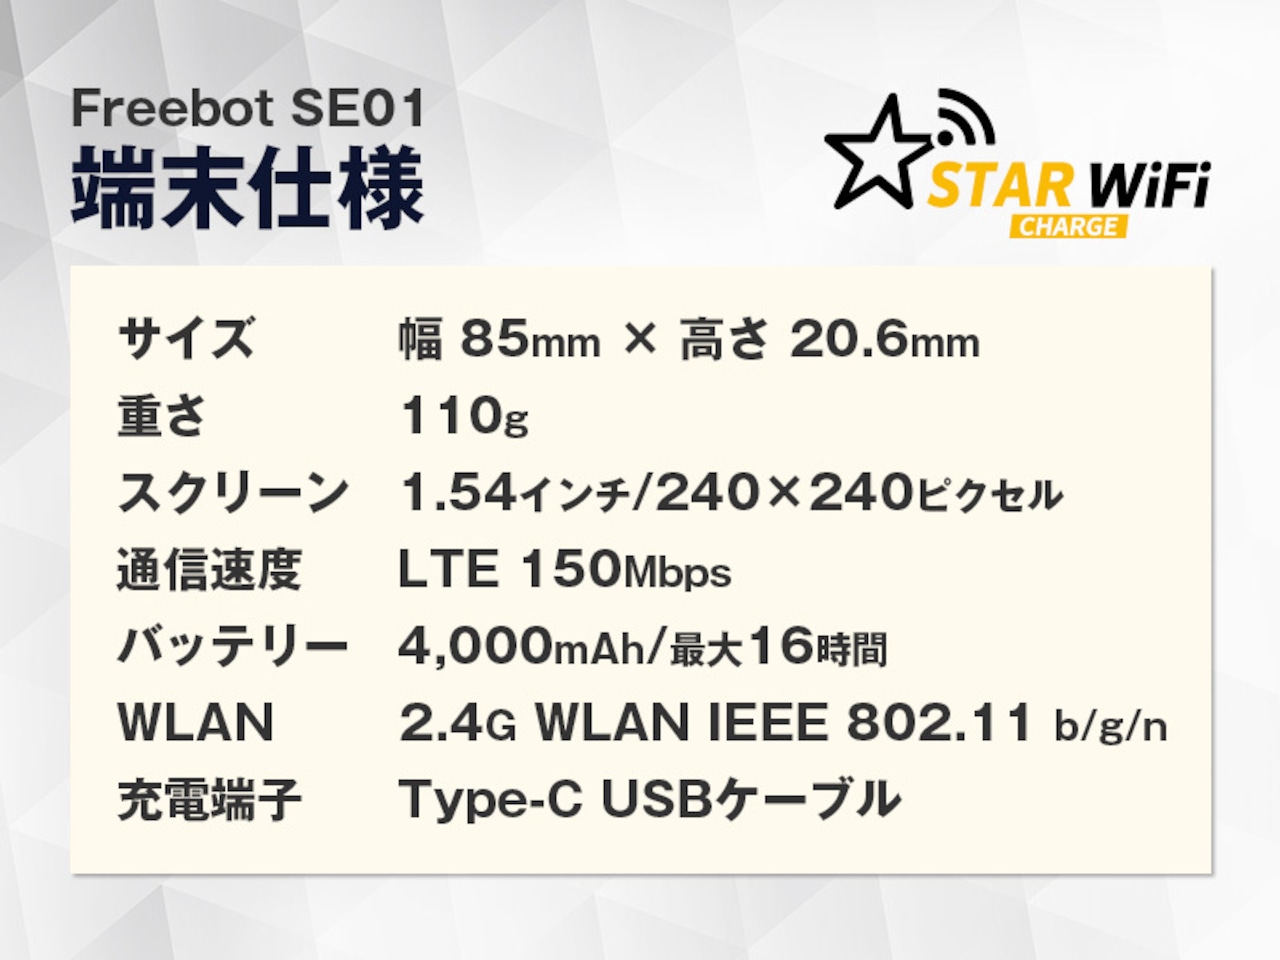 【10GBチャージ】STARチャージWi-Fi端末 FREEBOT Model SE01